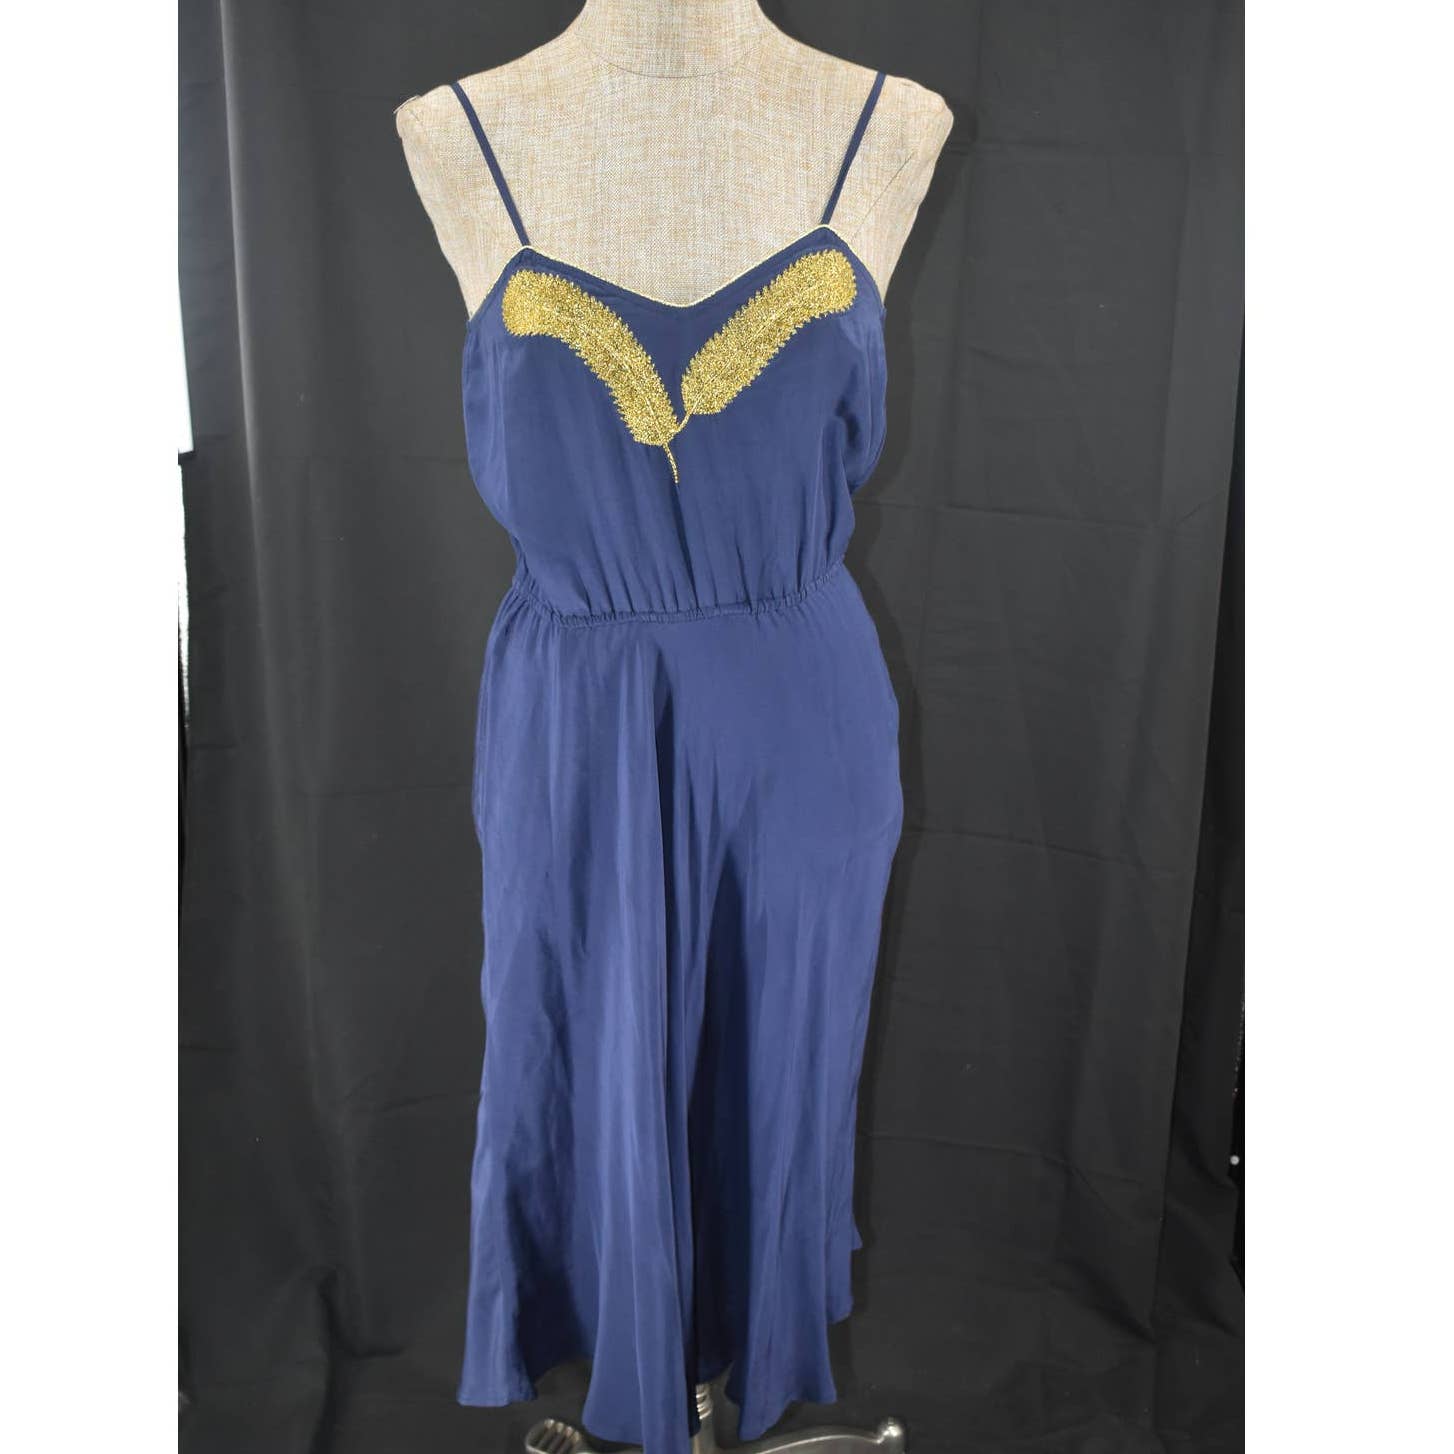 Barney's Co Op Beyond Vintage Blue Gold Metallic Dress - S